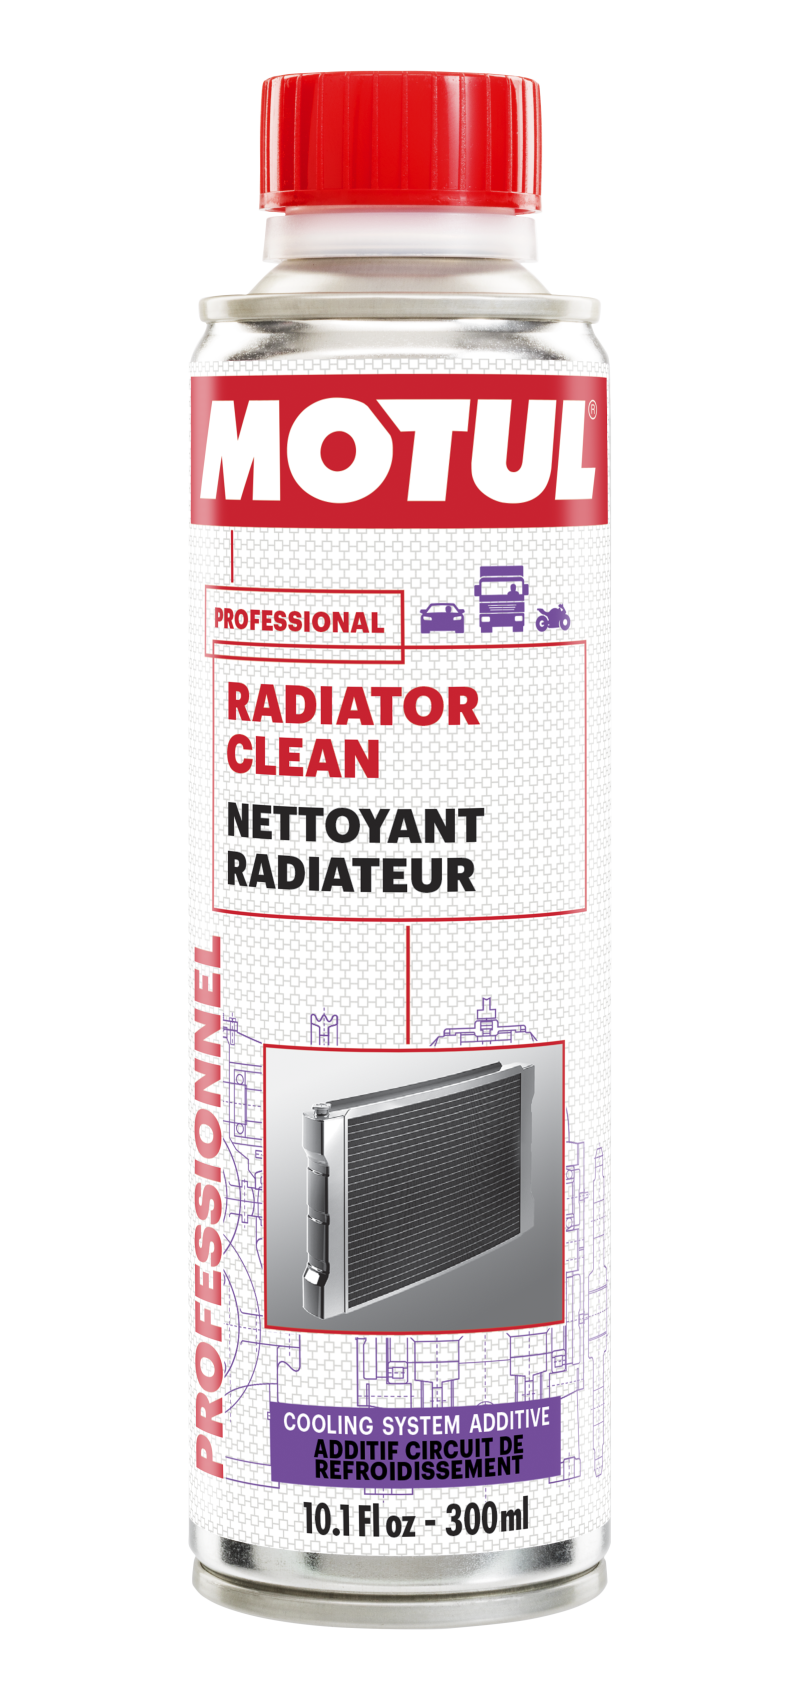 Motul 300ml Radiator Clean Additive - Case of 12